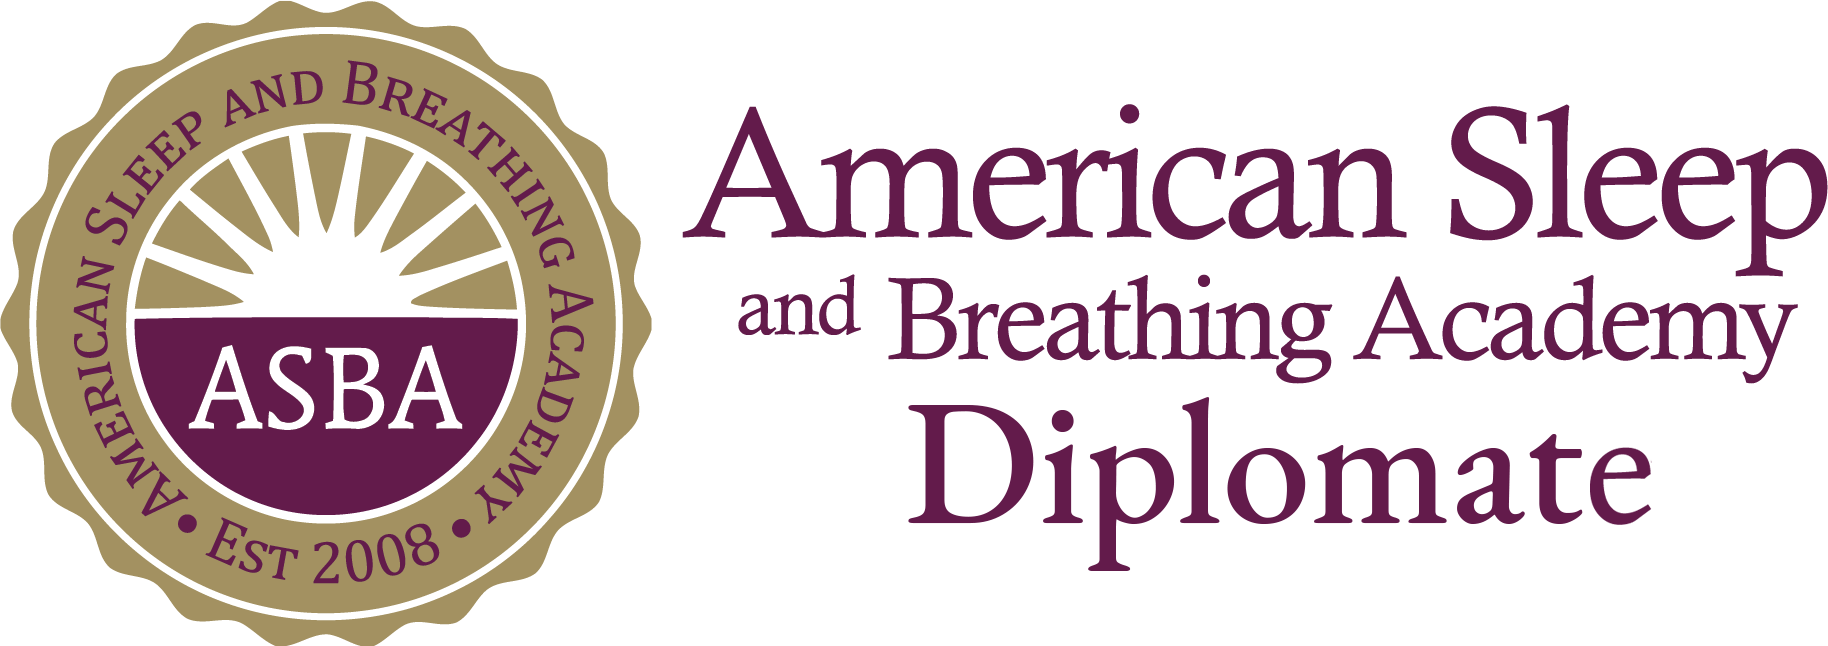 american sleep and breathing academy diplomat logo image